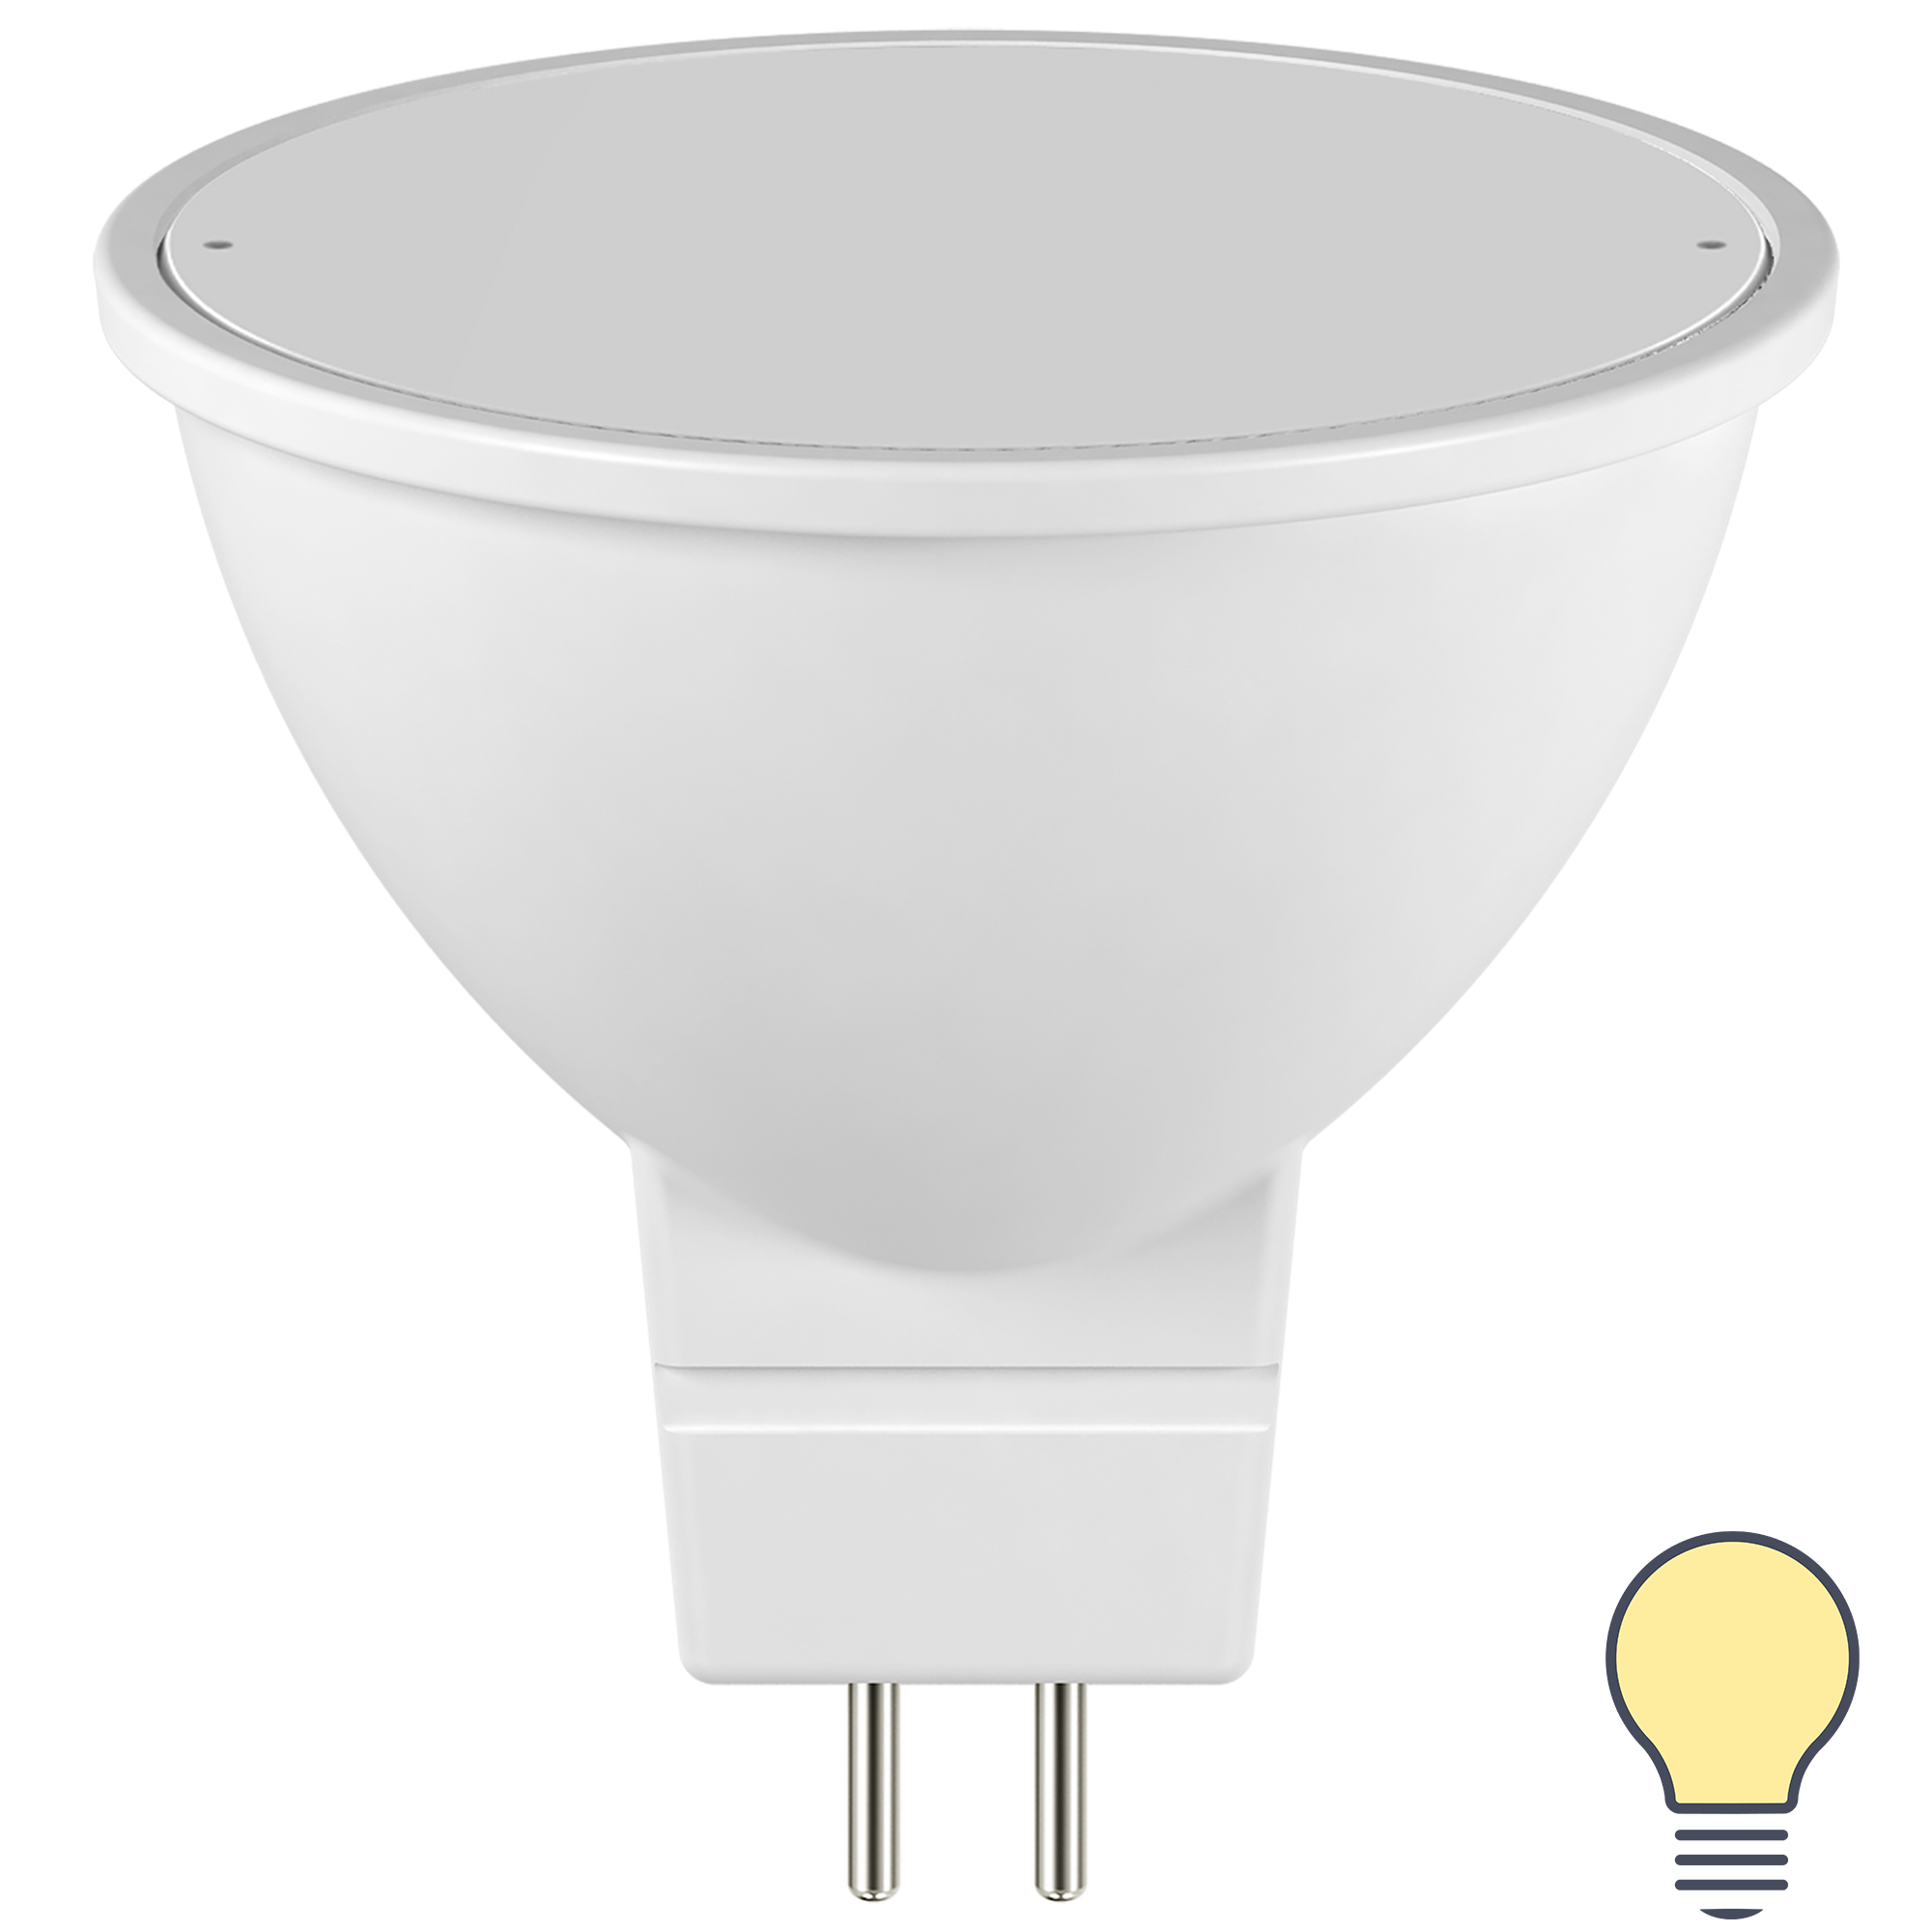 82991611 Лампа светодиодная Frosted G5.3 175-250 В 7.5 Вт прозрачная 700 лм теплый белый свет STLM-0038578 LEXMAN